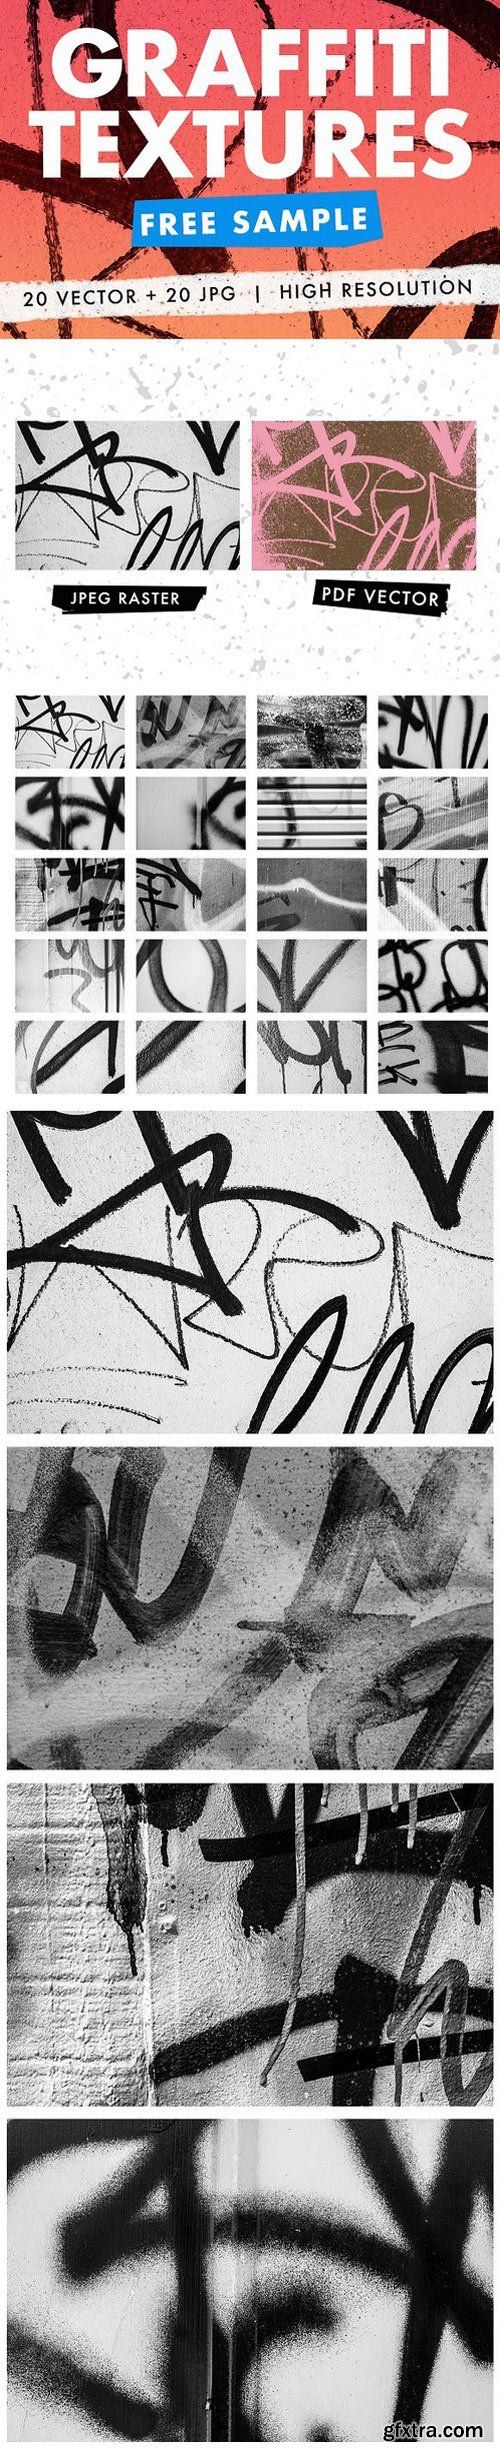 Graffiti Textures